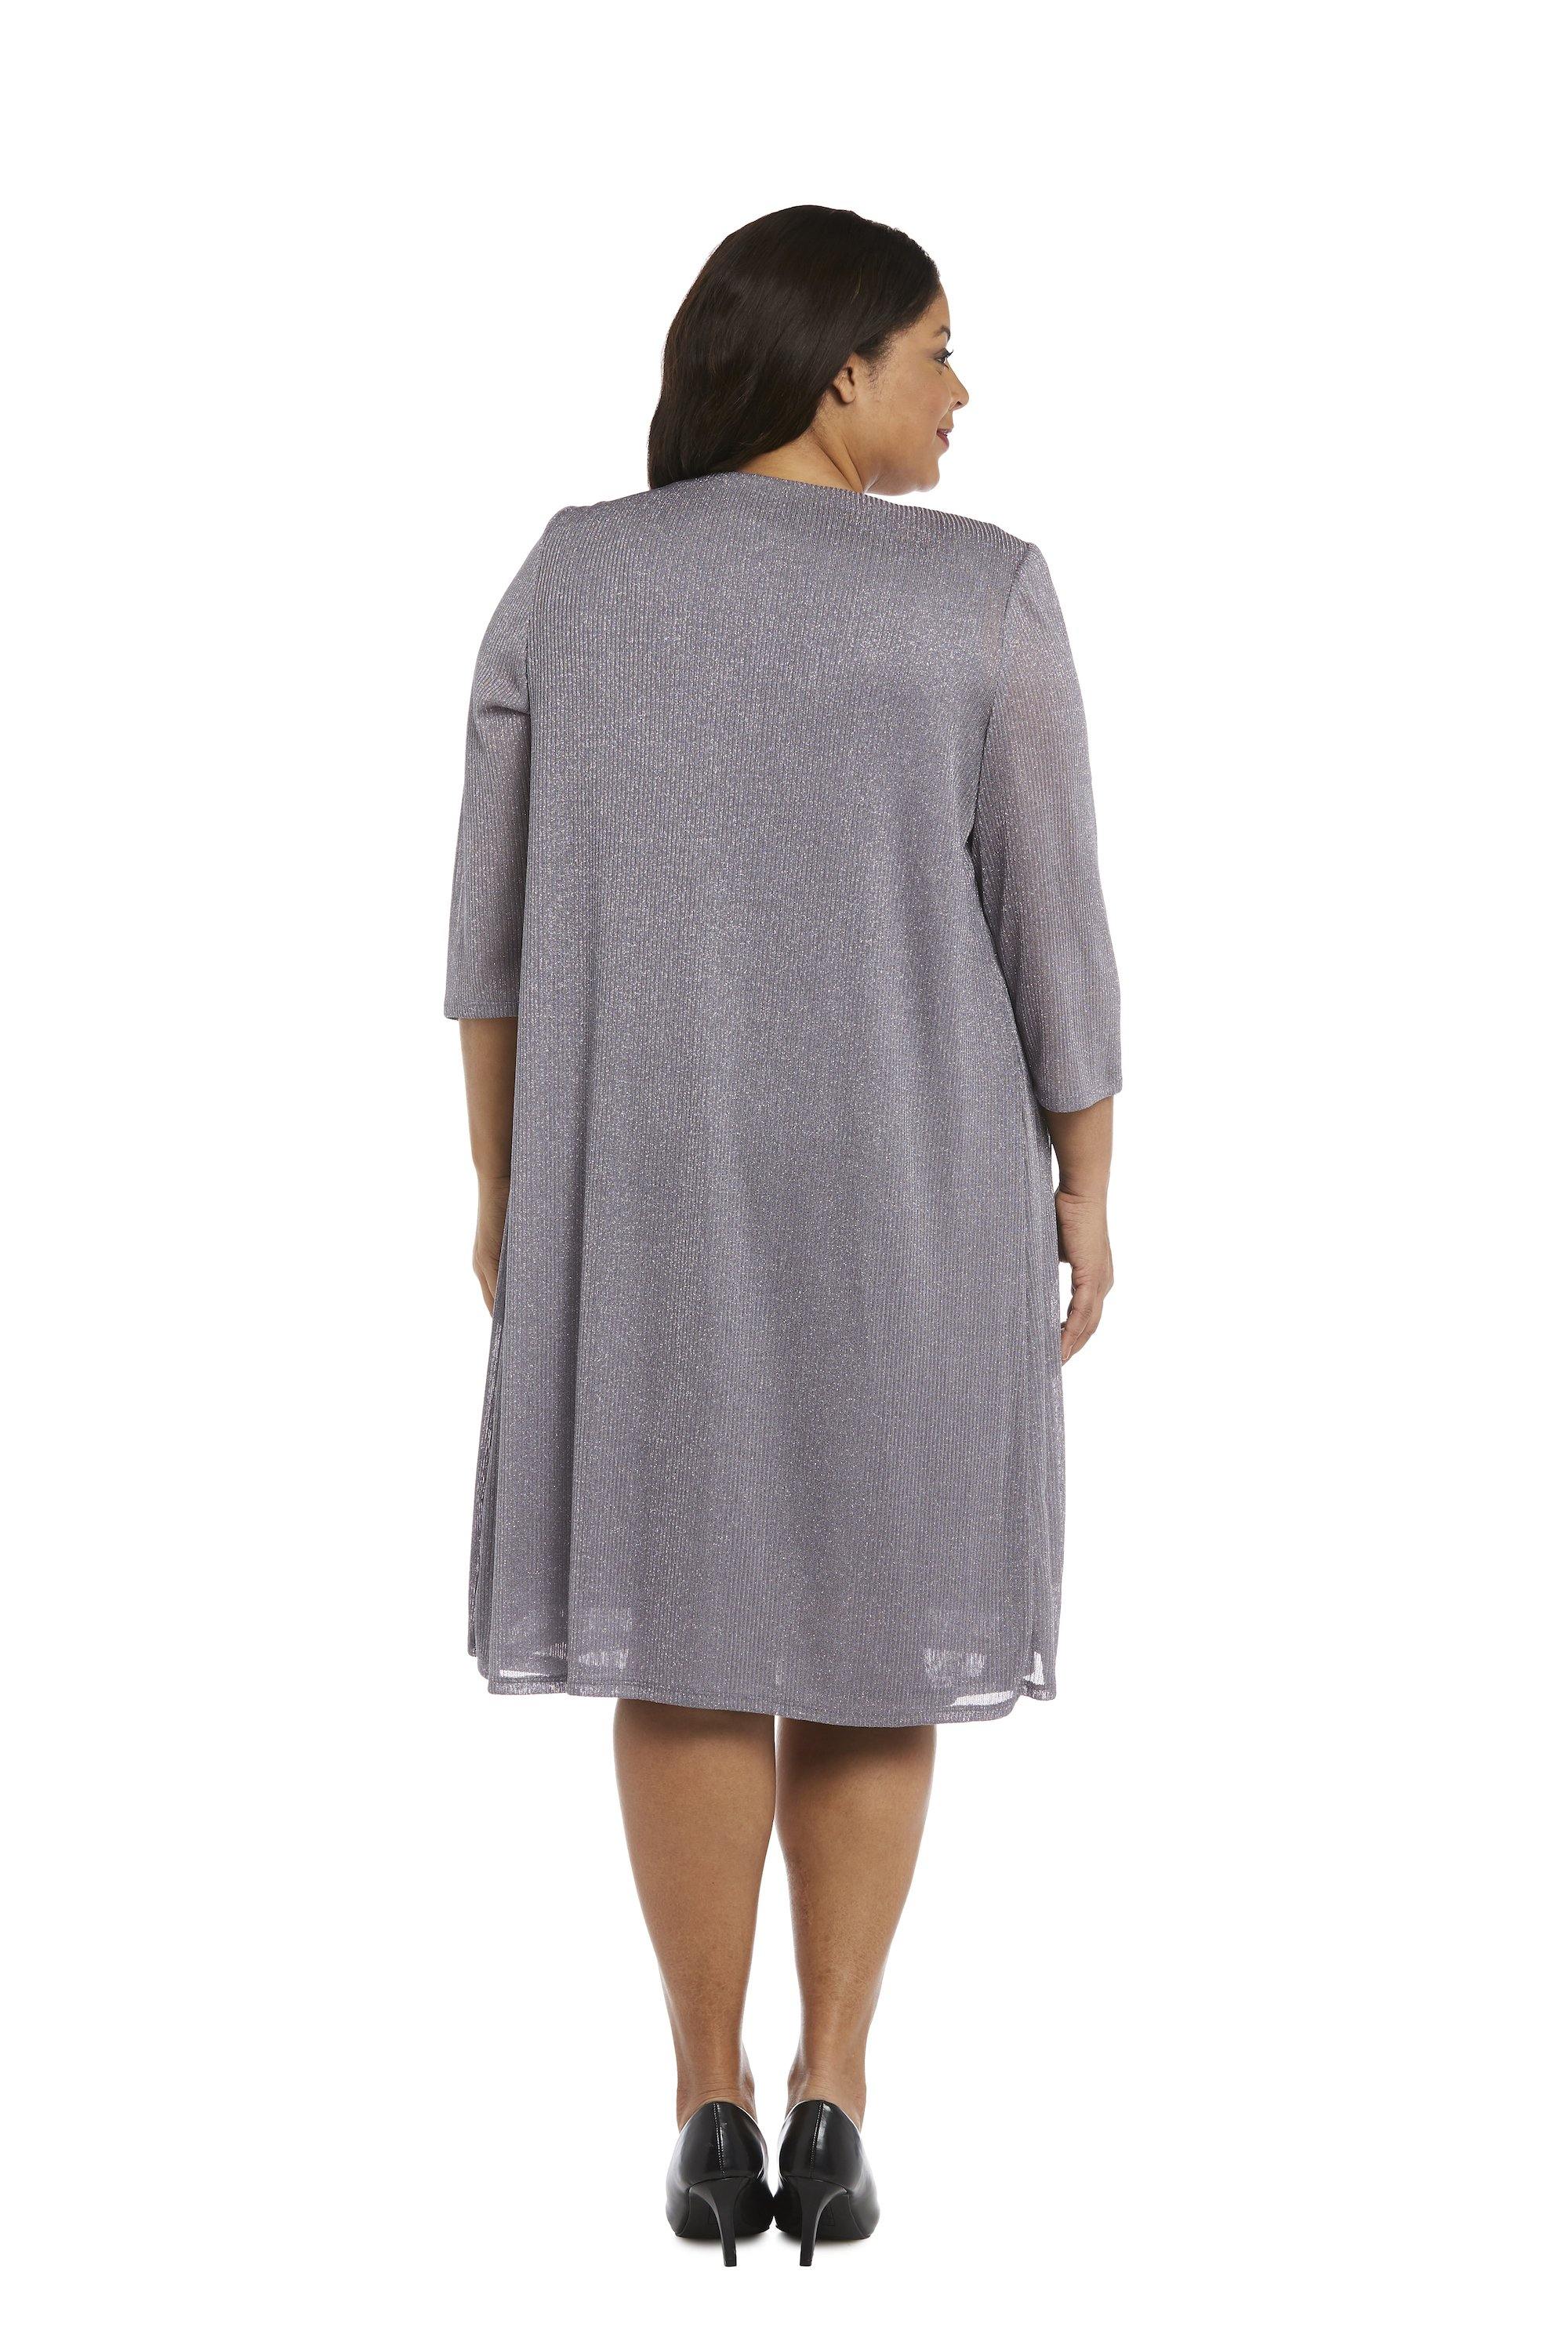 R&M Richards Short Plus Size Metallic Dress 1647W - The Dress Outlet